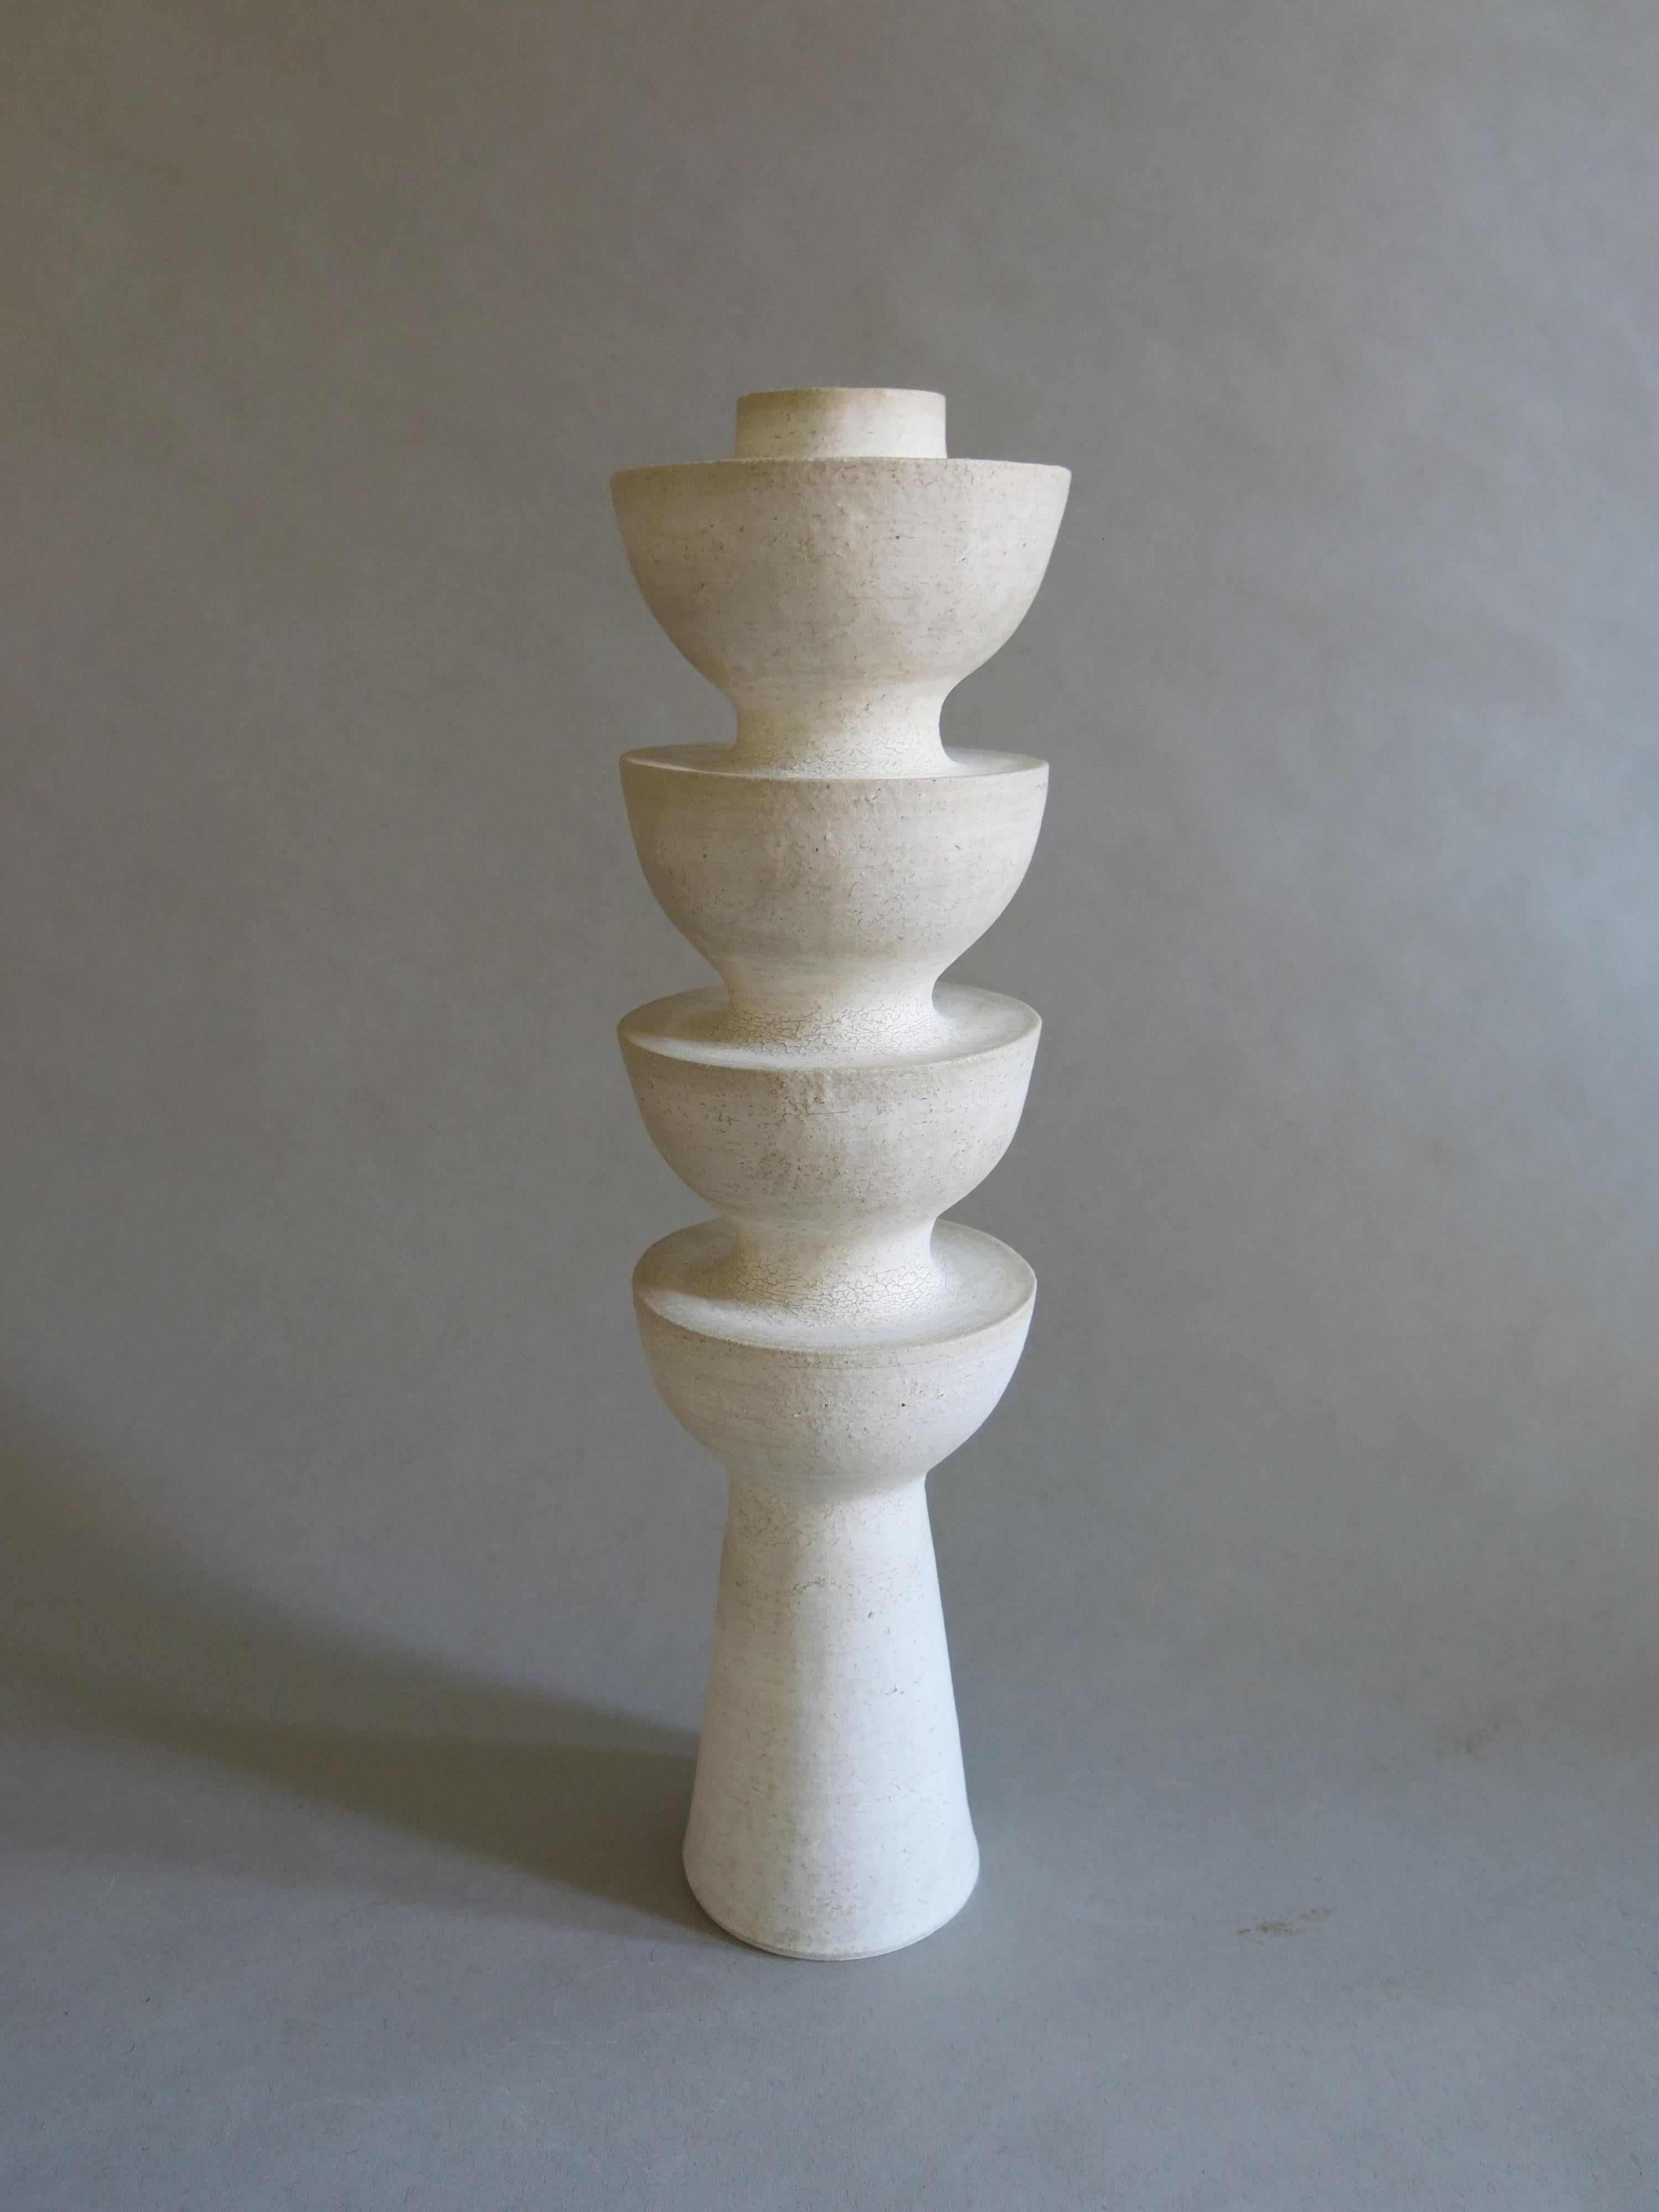 Ensemble of Four Ceramic Vases by John Born 2